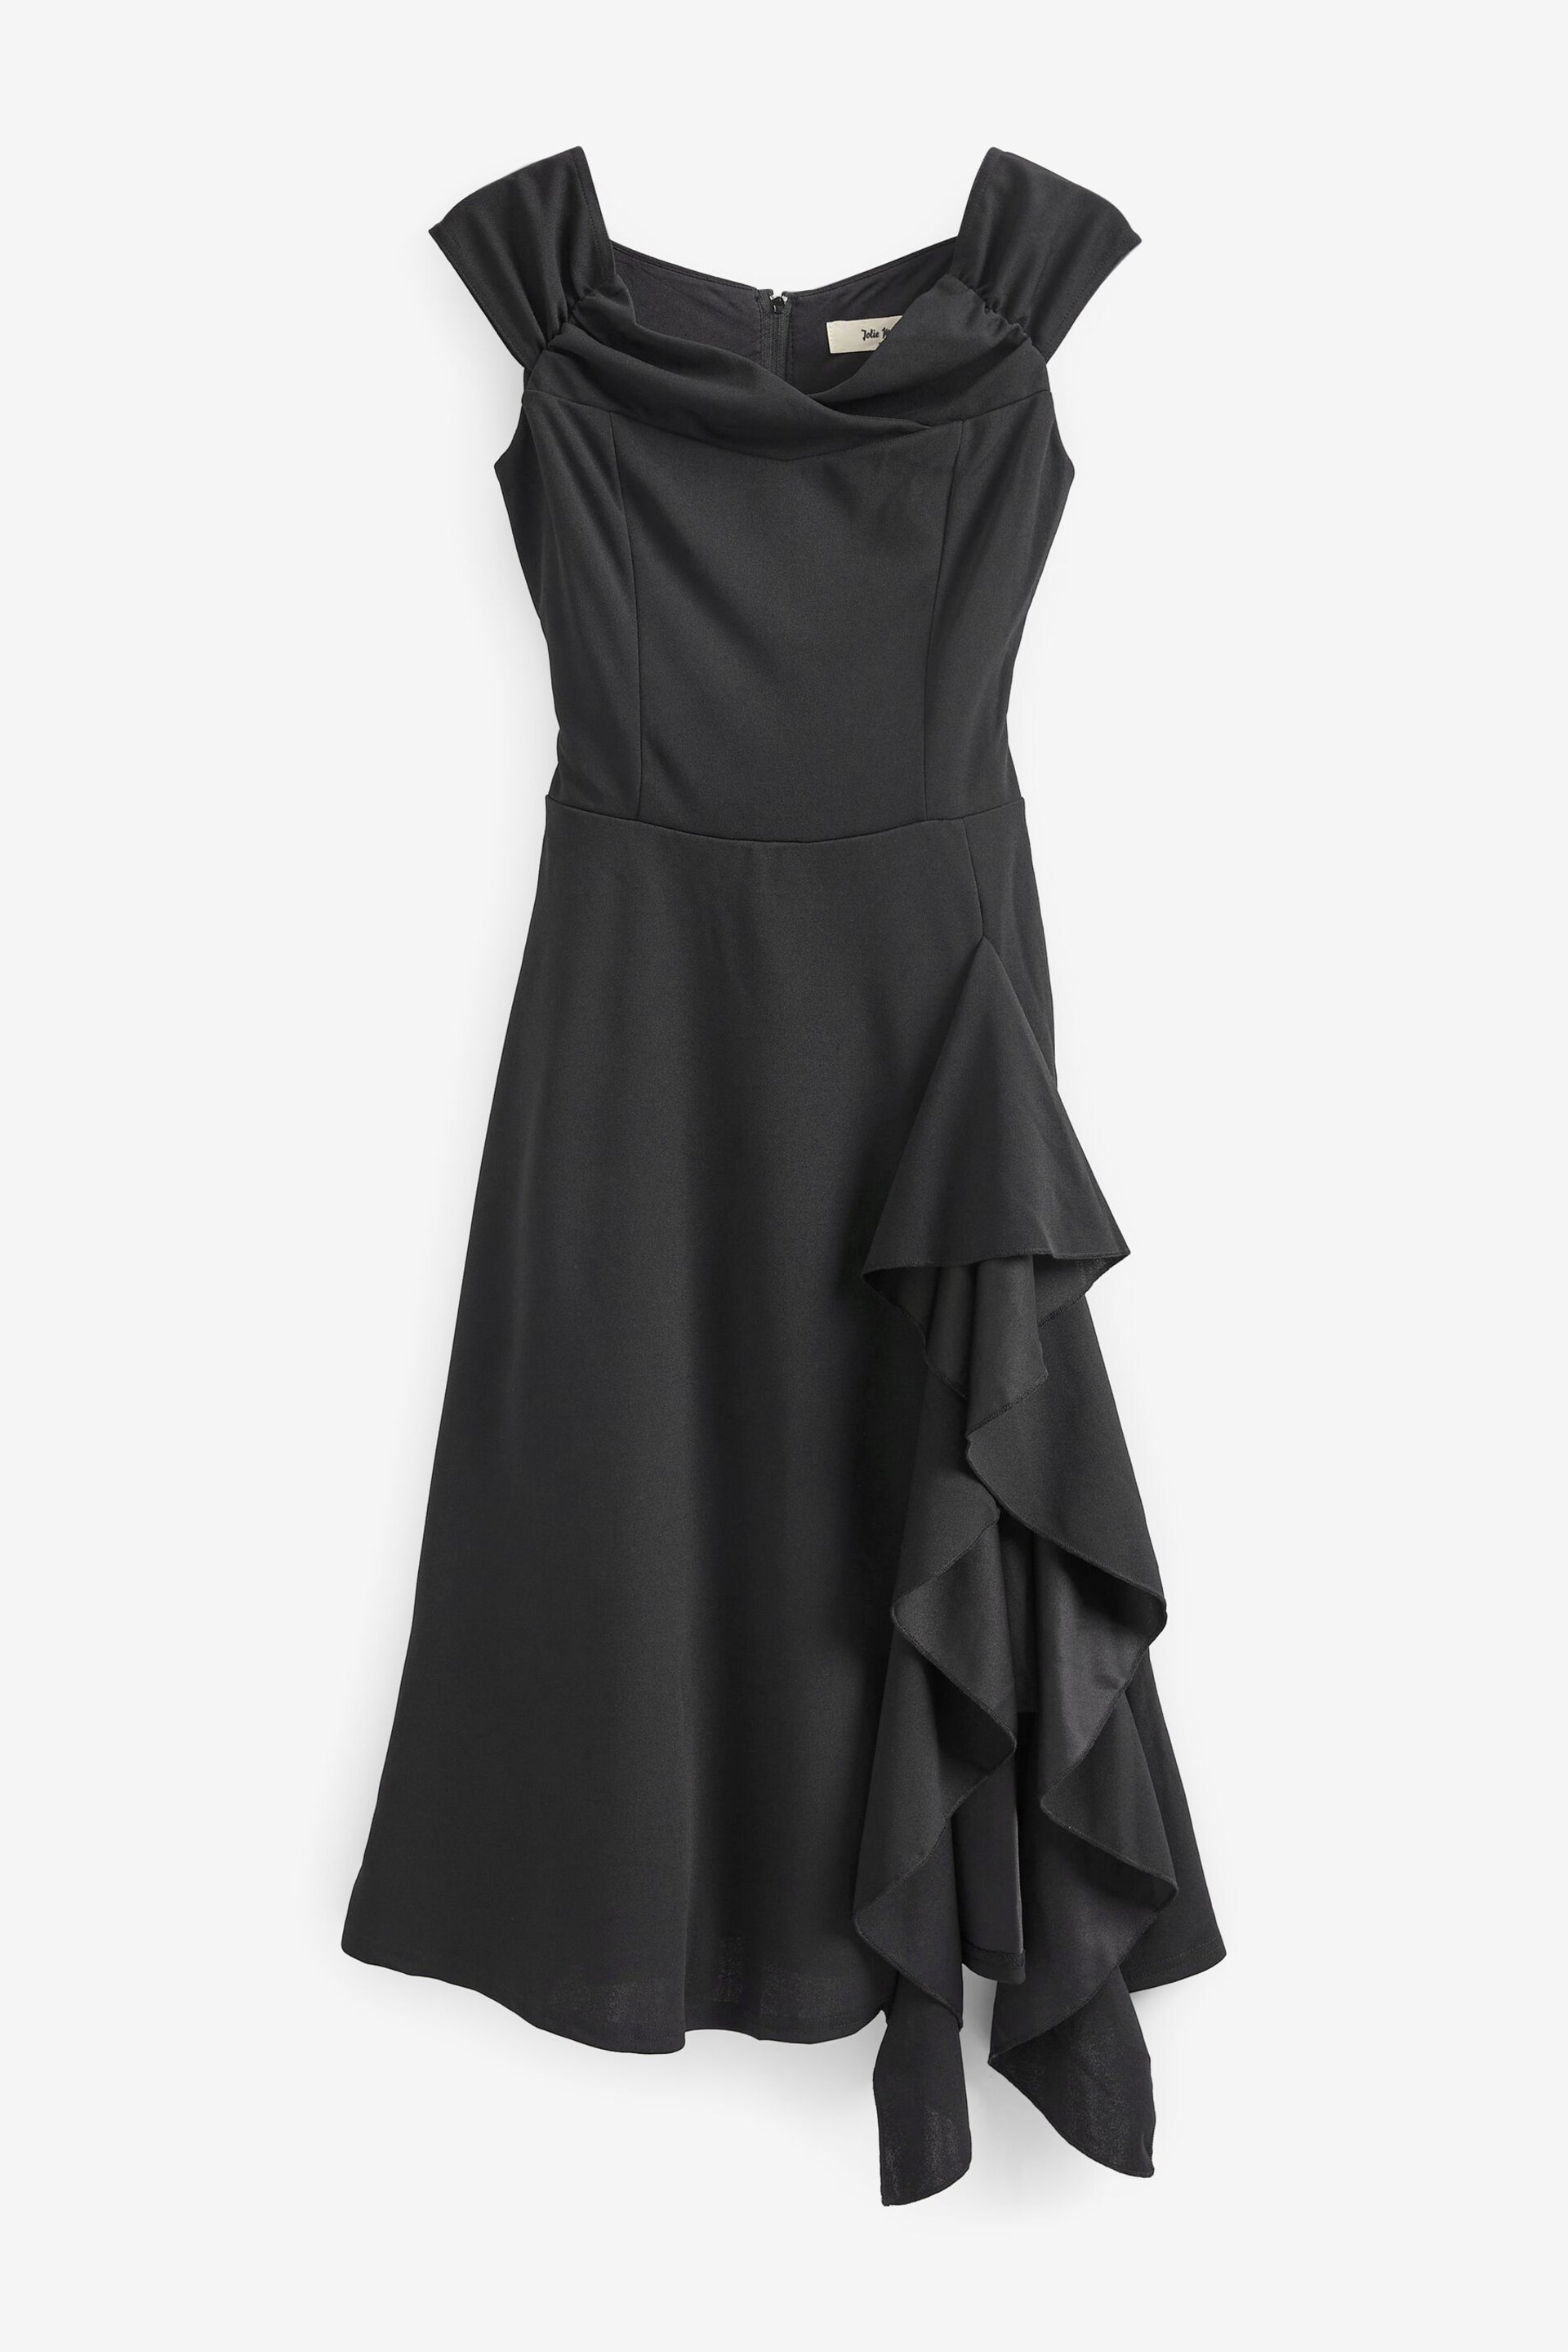 Jolie Moi Black Desiree Frill Fit & Flare Dress - Image 7 of 7